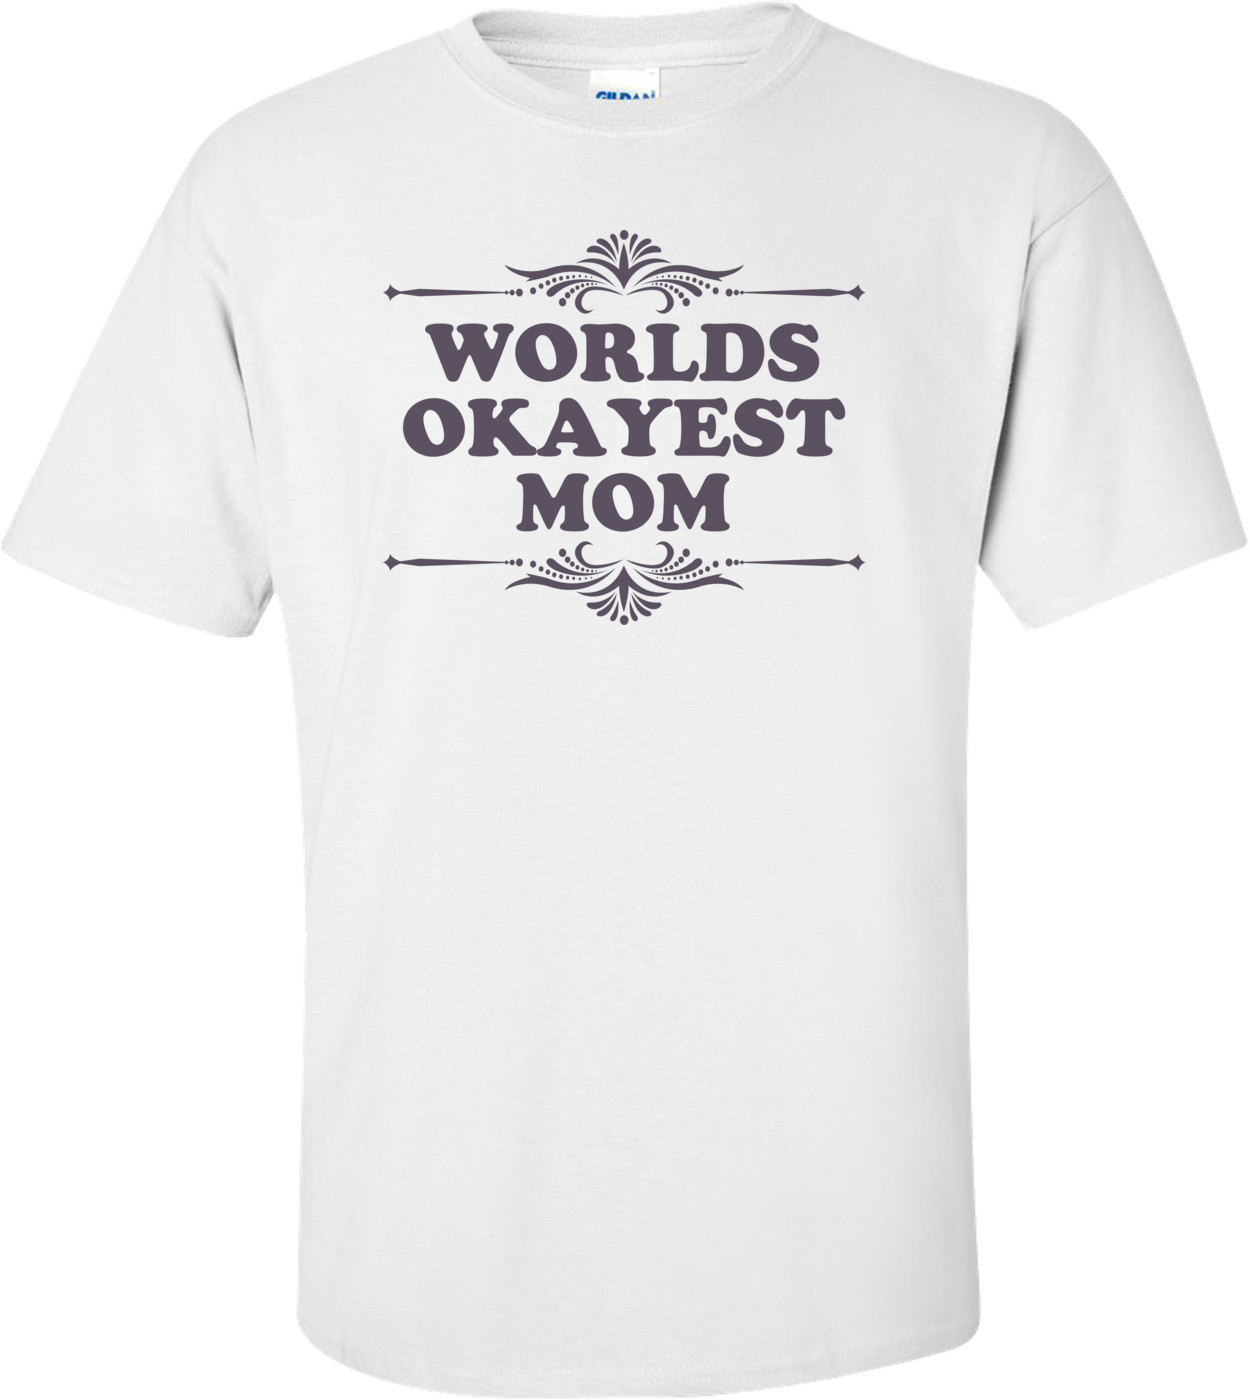 World's Okayest Mom Funny T-shirt